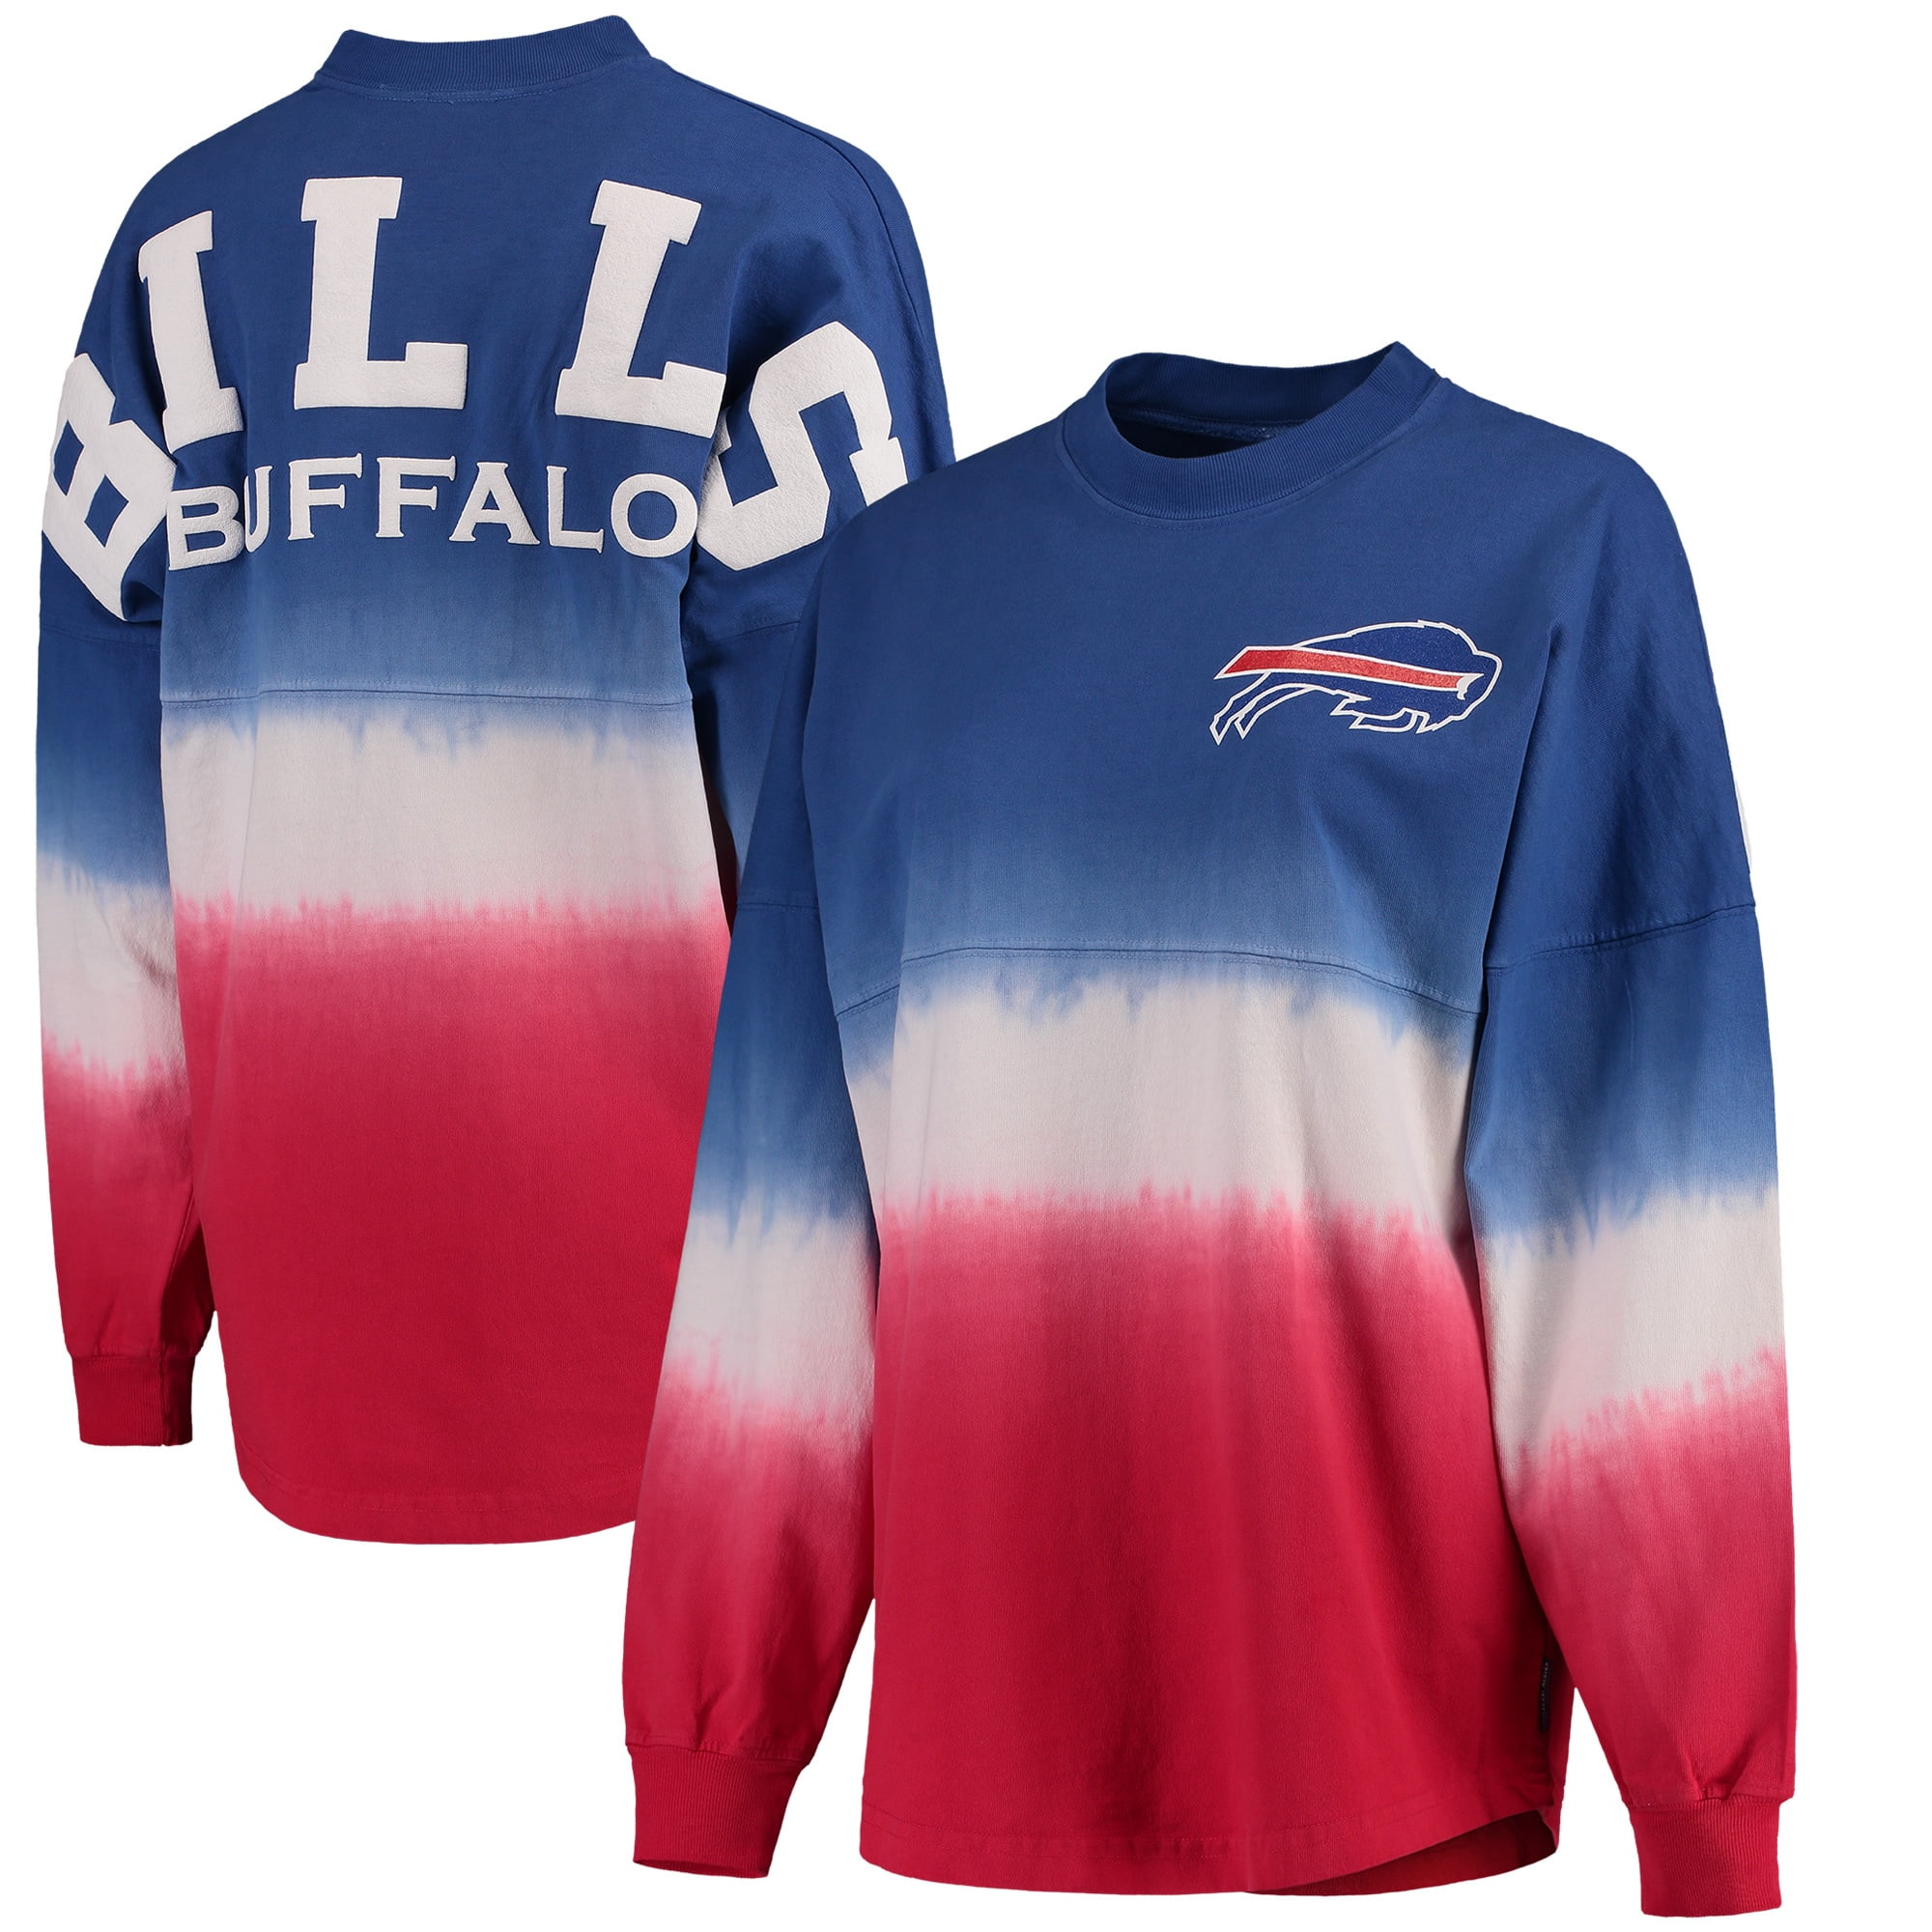 Buffalo Bills NFL Pro Line by Fanatics 